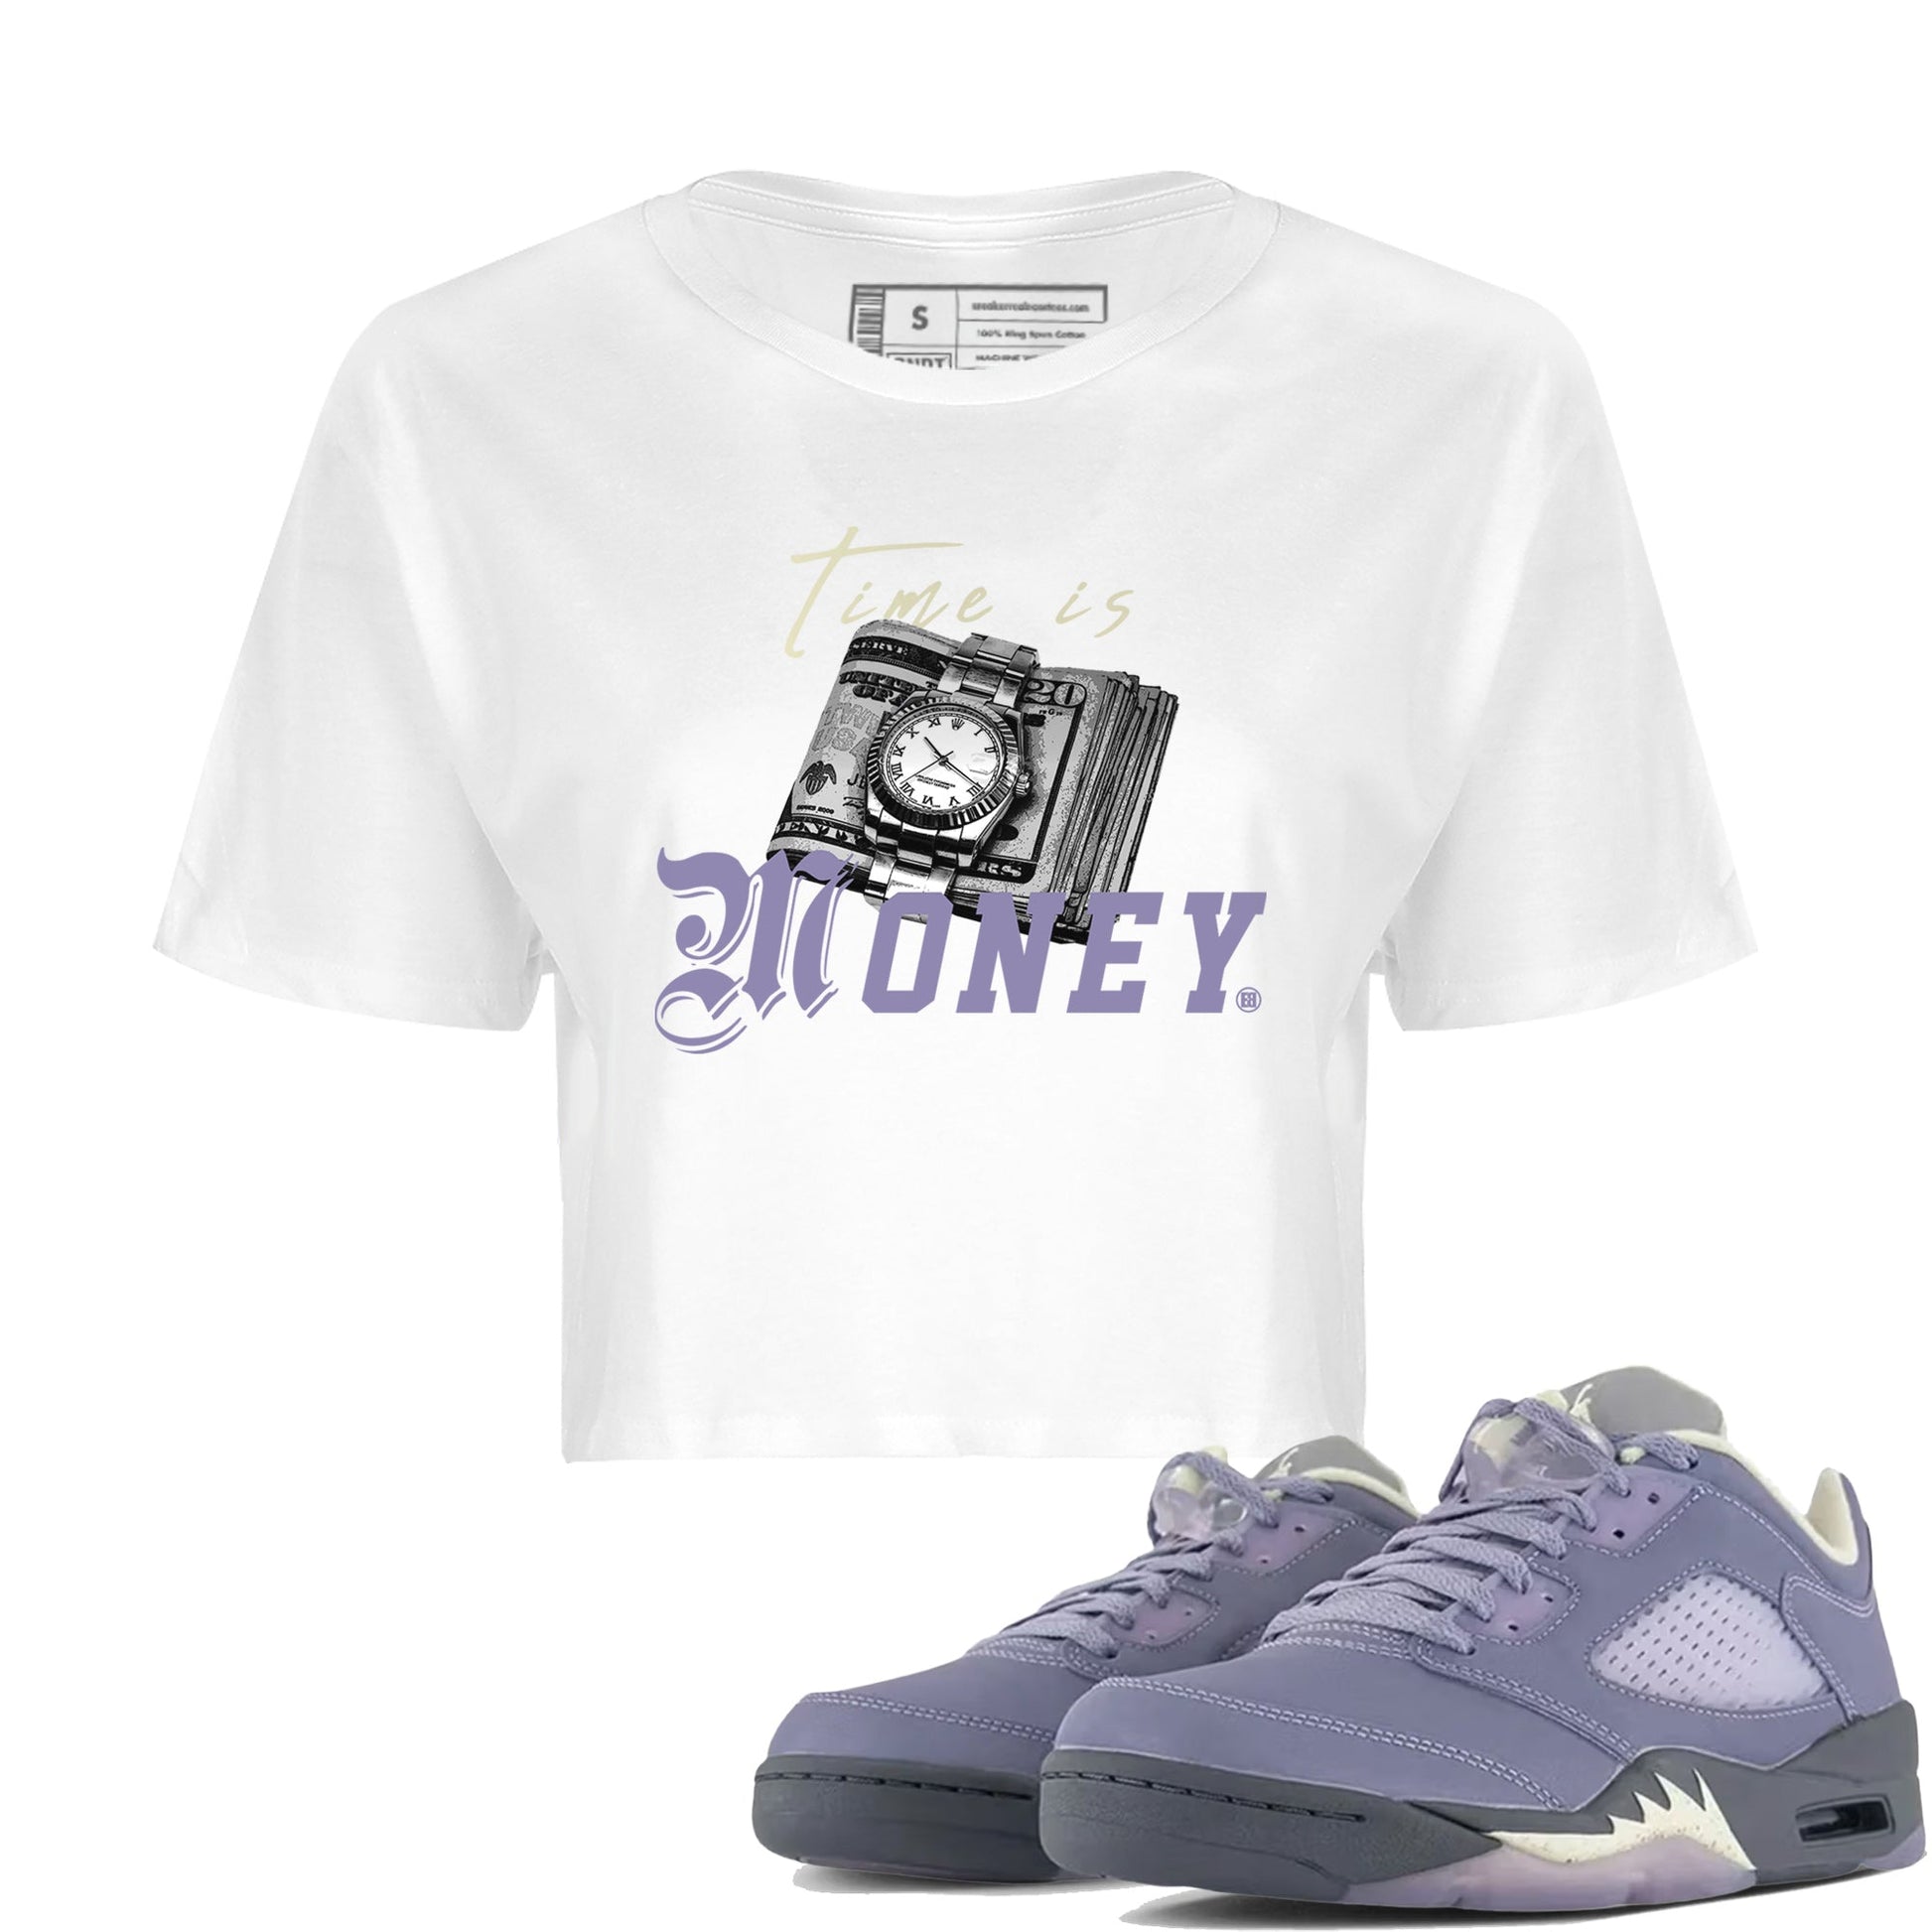 5s Indigo Haze Sneaker Match Tees Time Is Money Sneaker T-Shirt Air Jordan 5 Indigo Haze Sneaker Release Tees Women's Shirts White 1